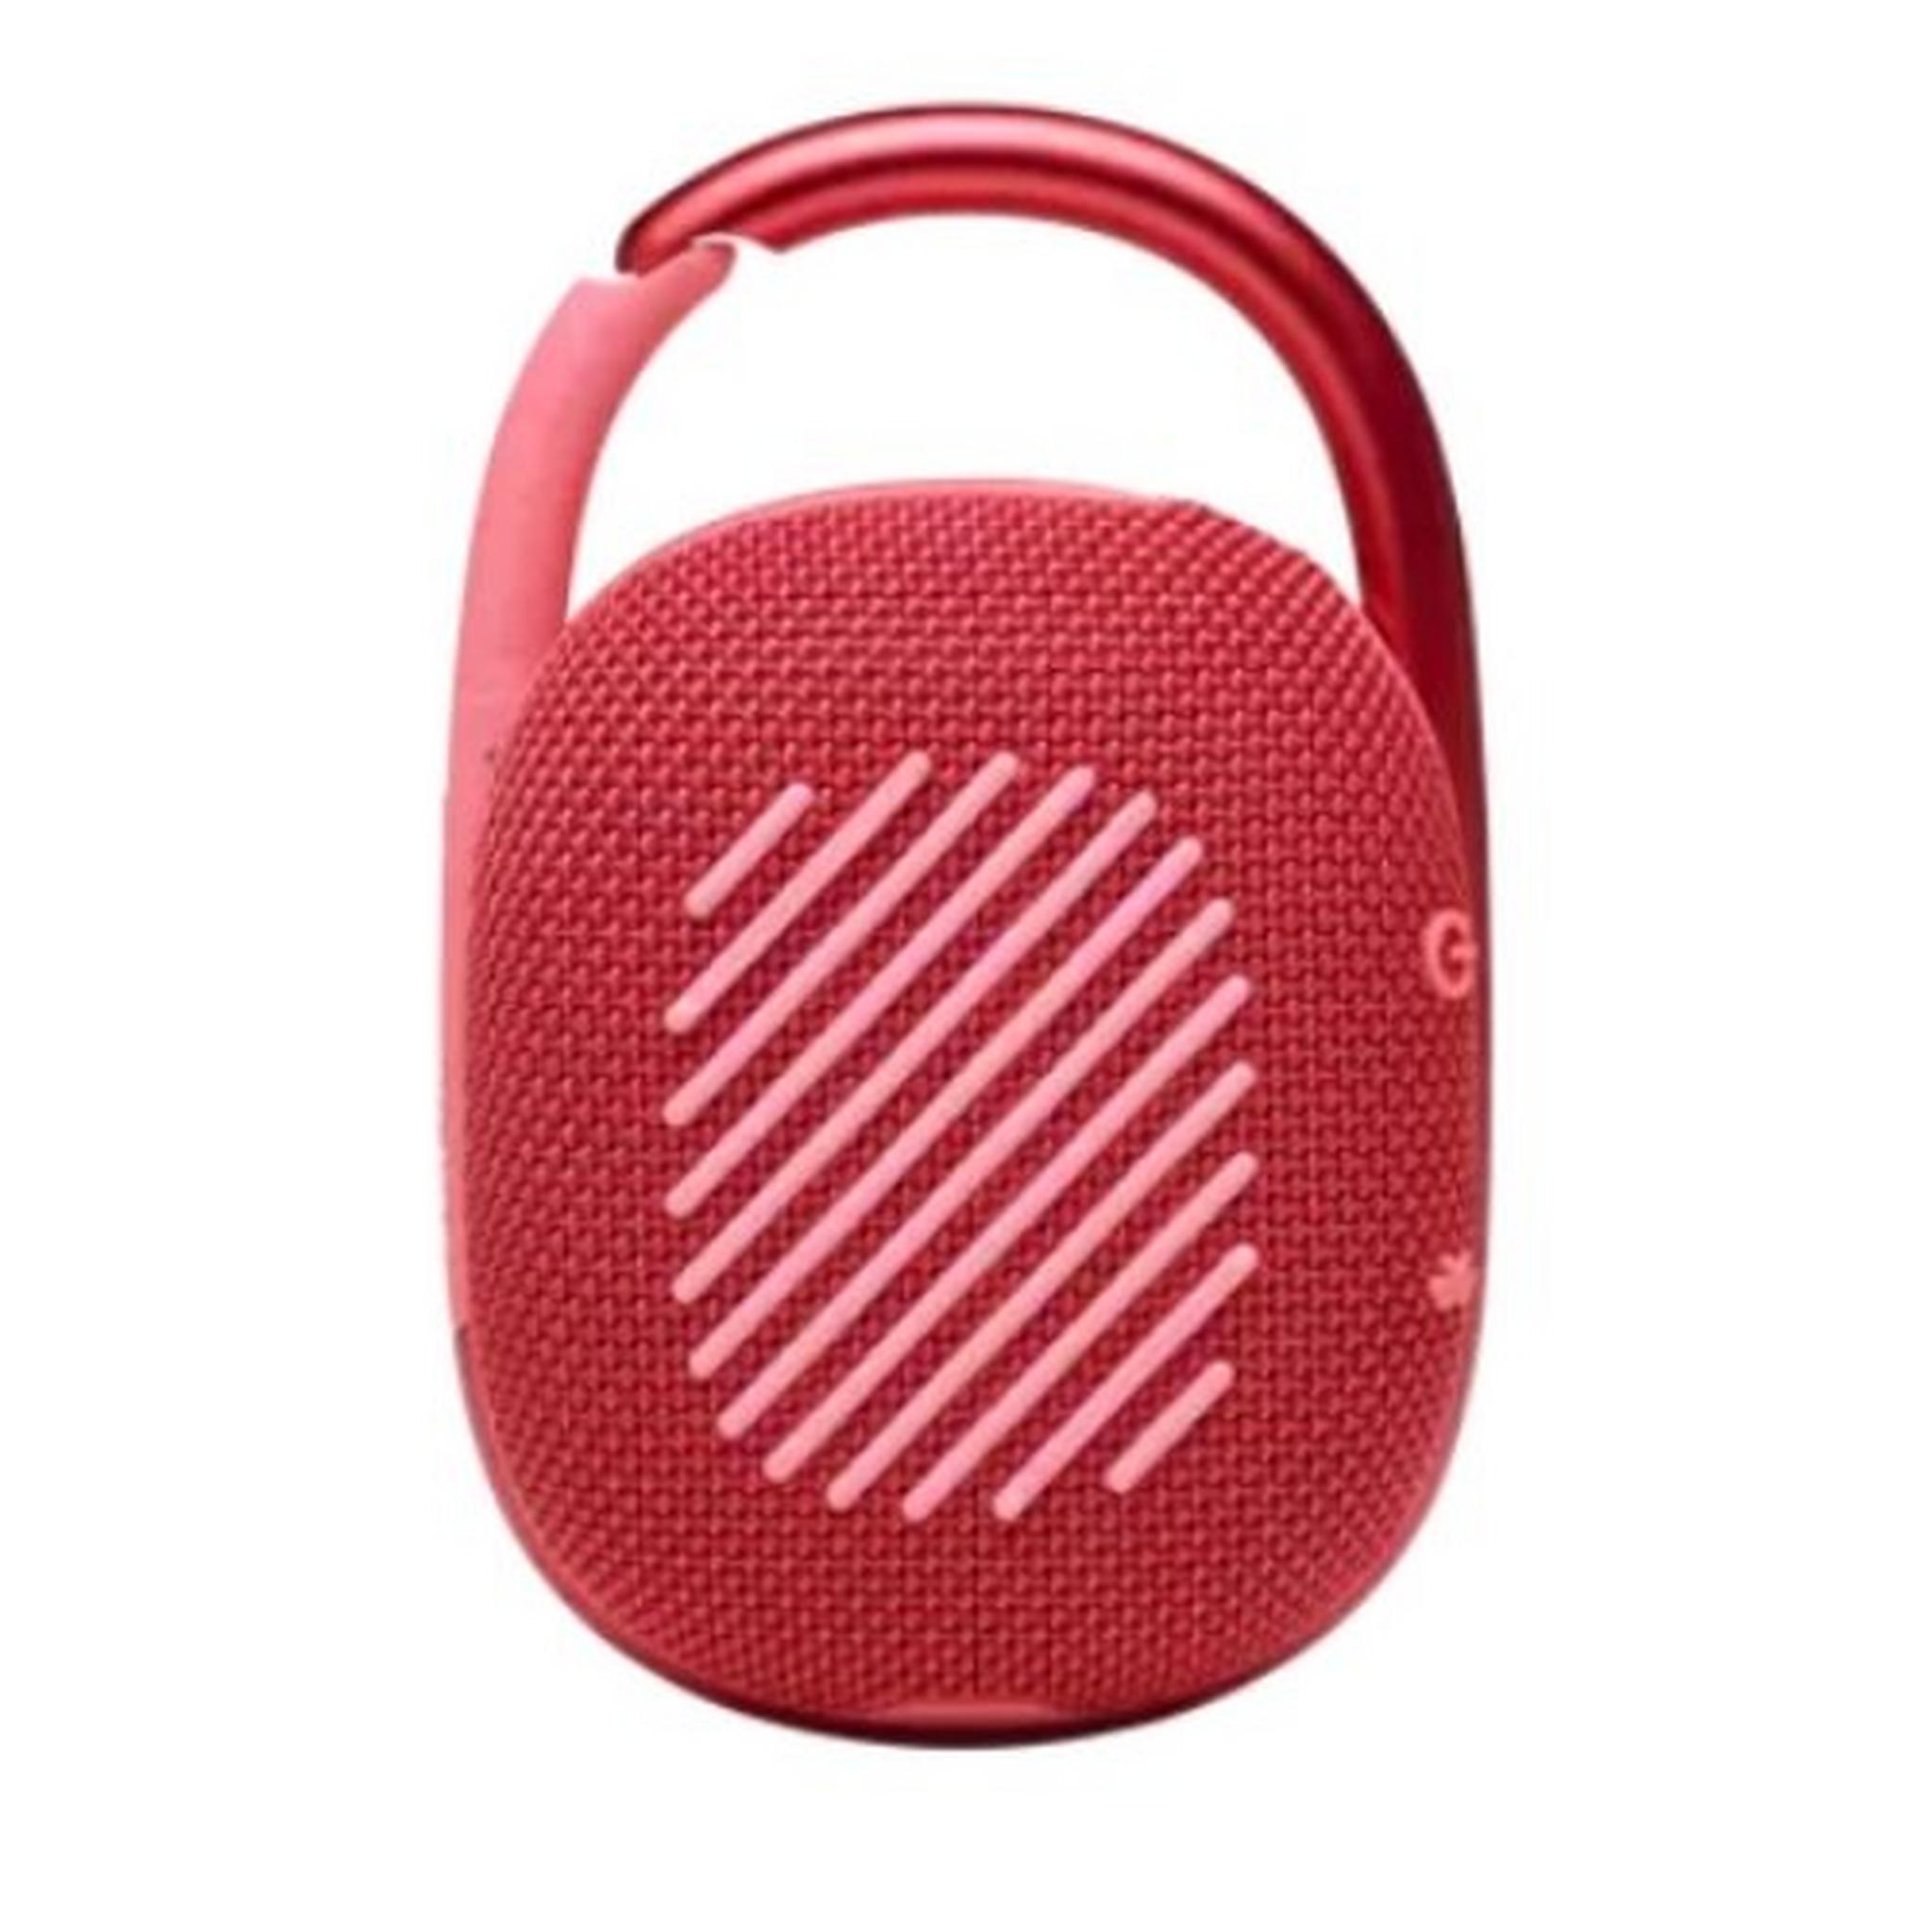 JBL Clip 4 Portable Wireless Speaker - Red